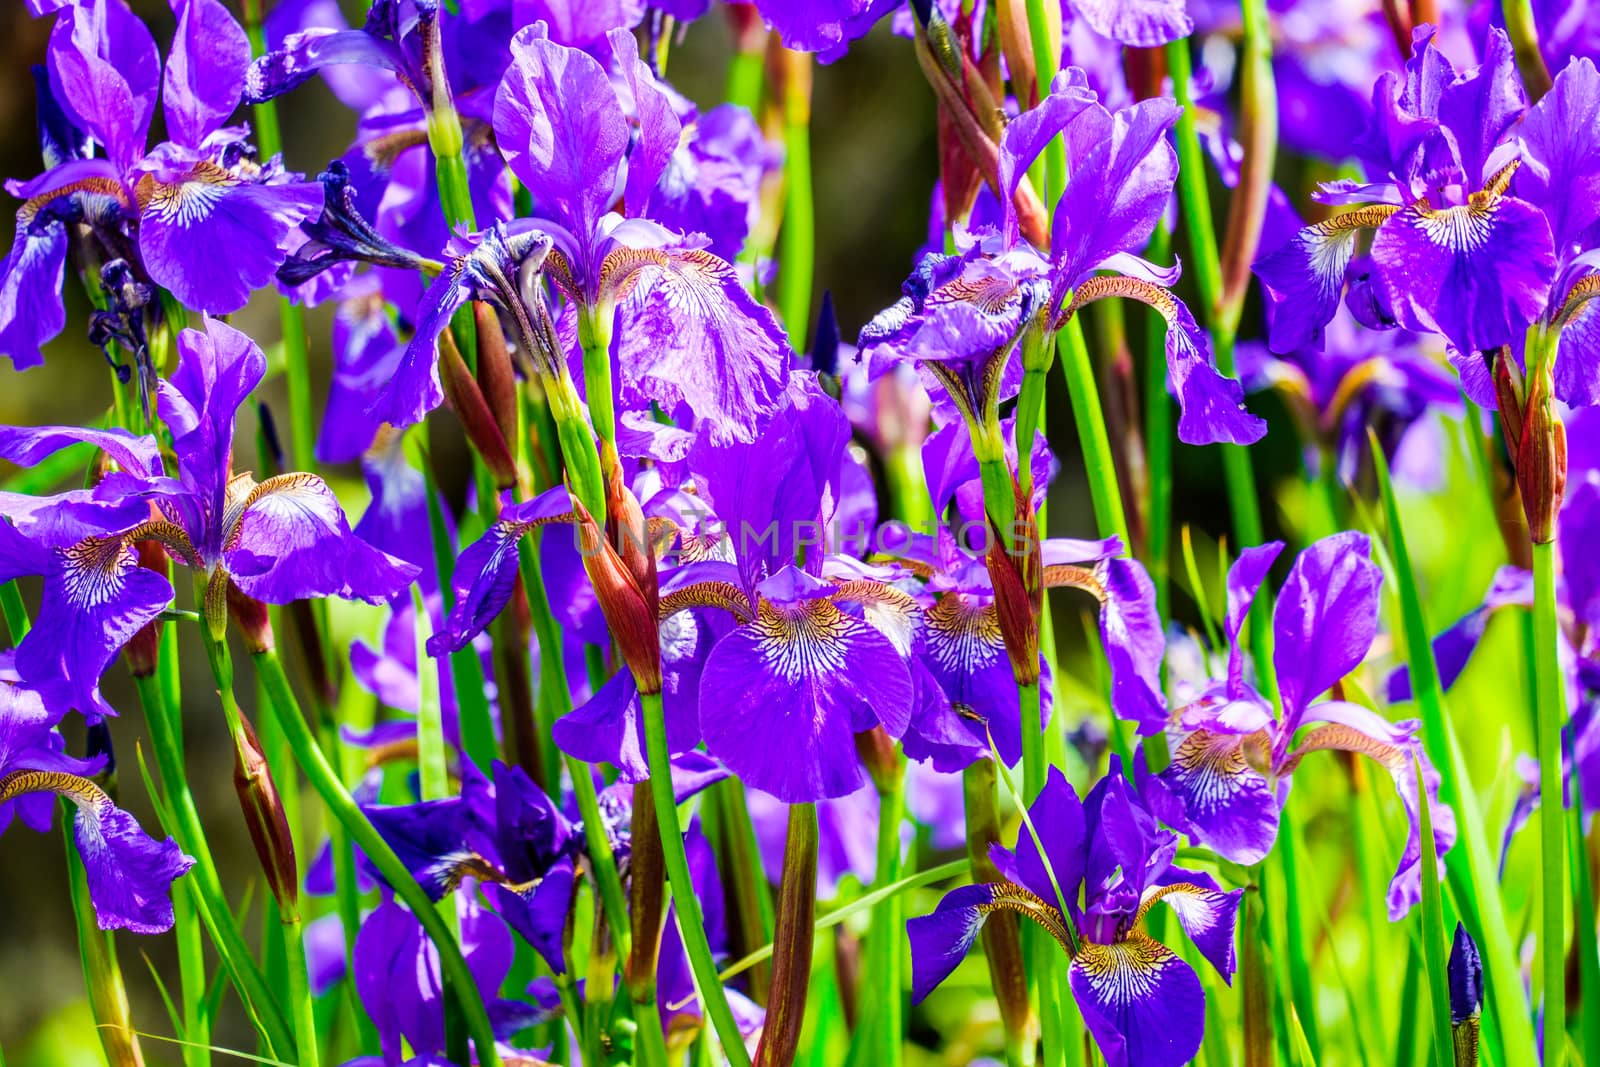 iris flower close upclose up a of group of iris flowers in a garden